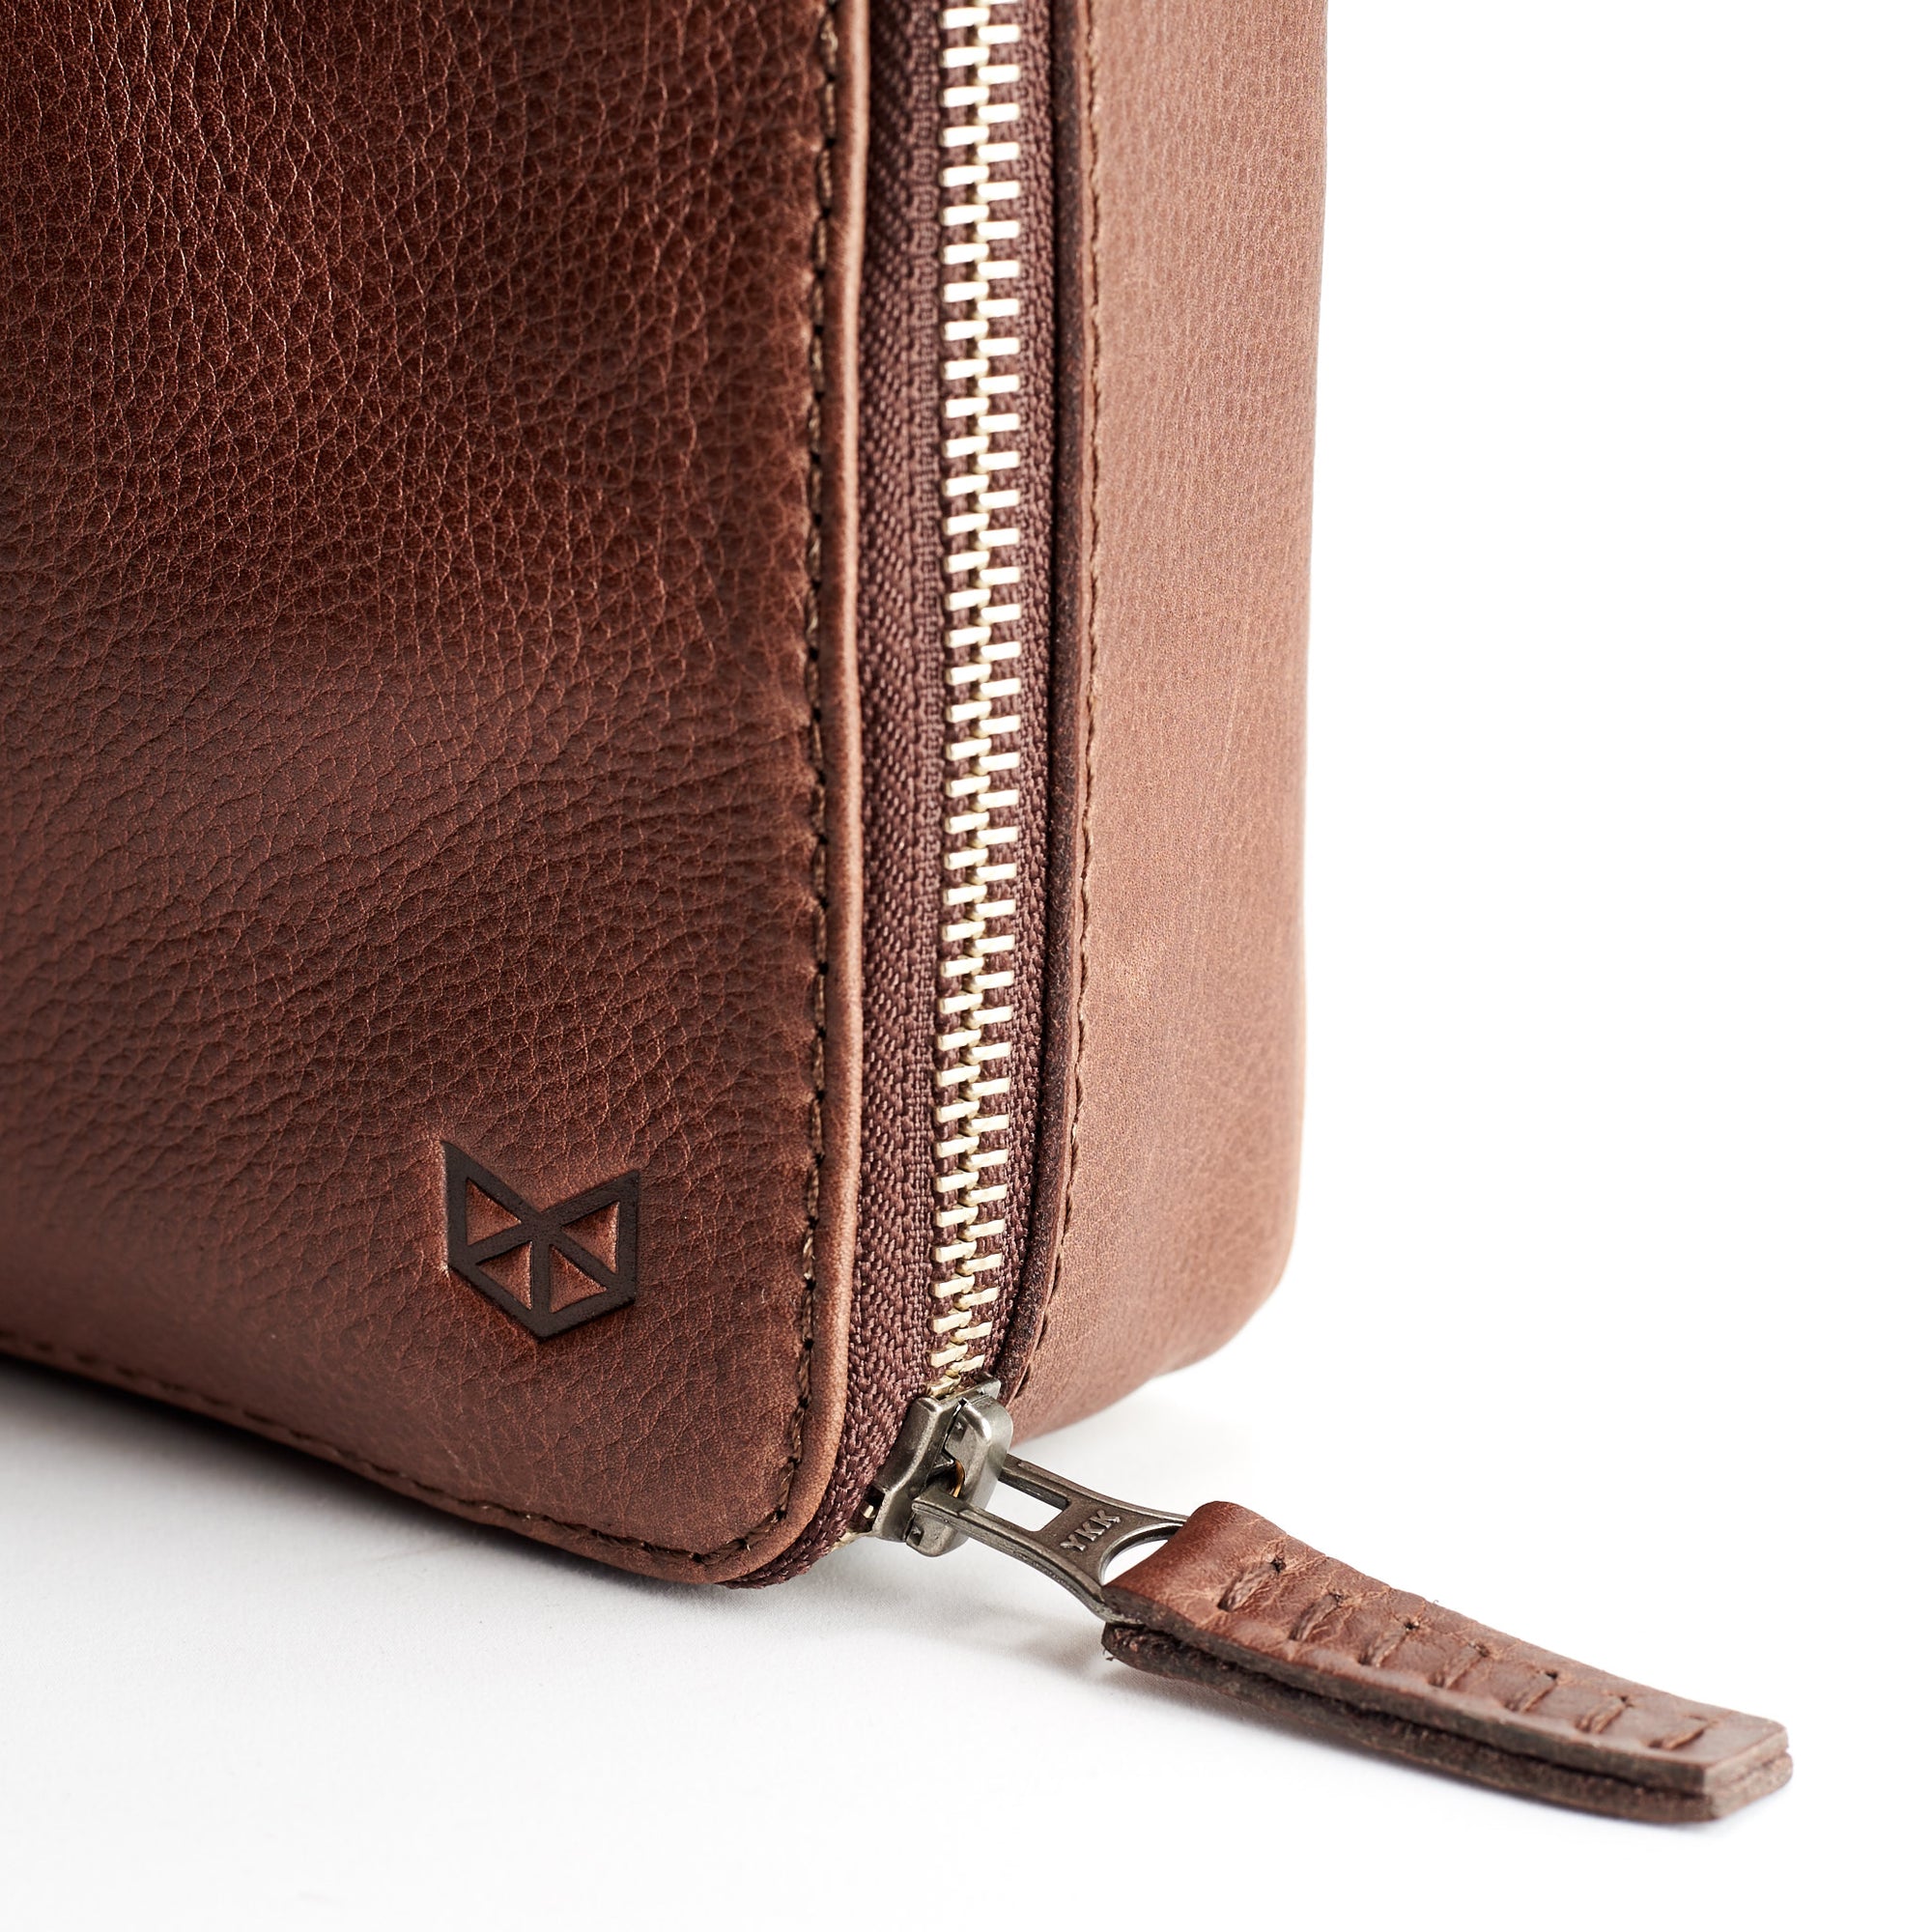 Metallic YKK zipper. Brown gadget pouch by Capra Leather